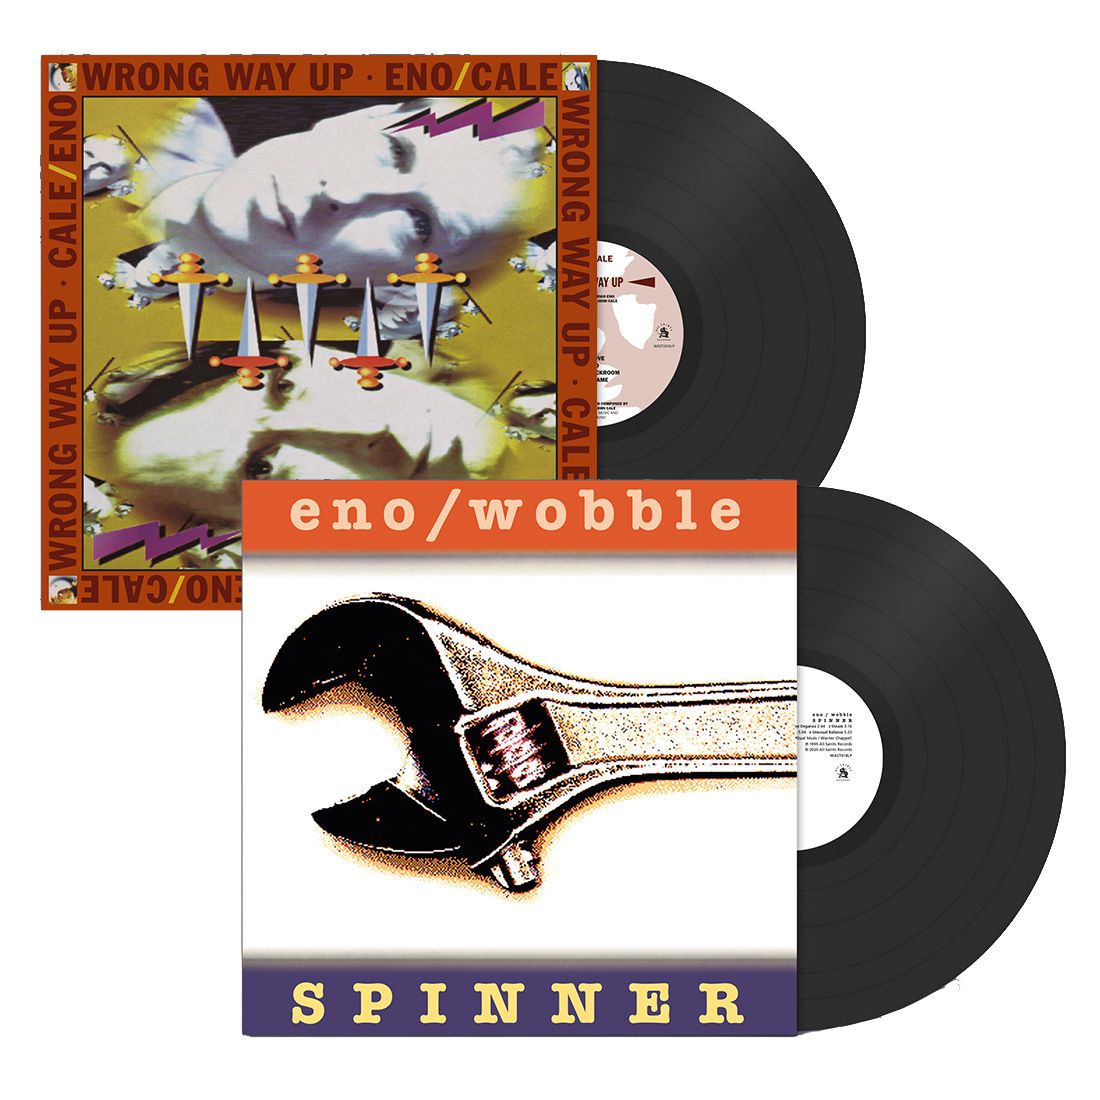 Brian Eno & John Cale - Wrong Way Up/  Brian Eno & Jah Wobble - Spinner (All Saints Records) (Re-issues)